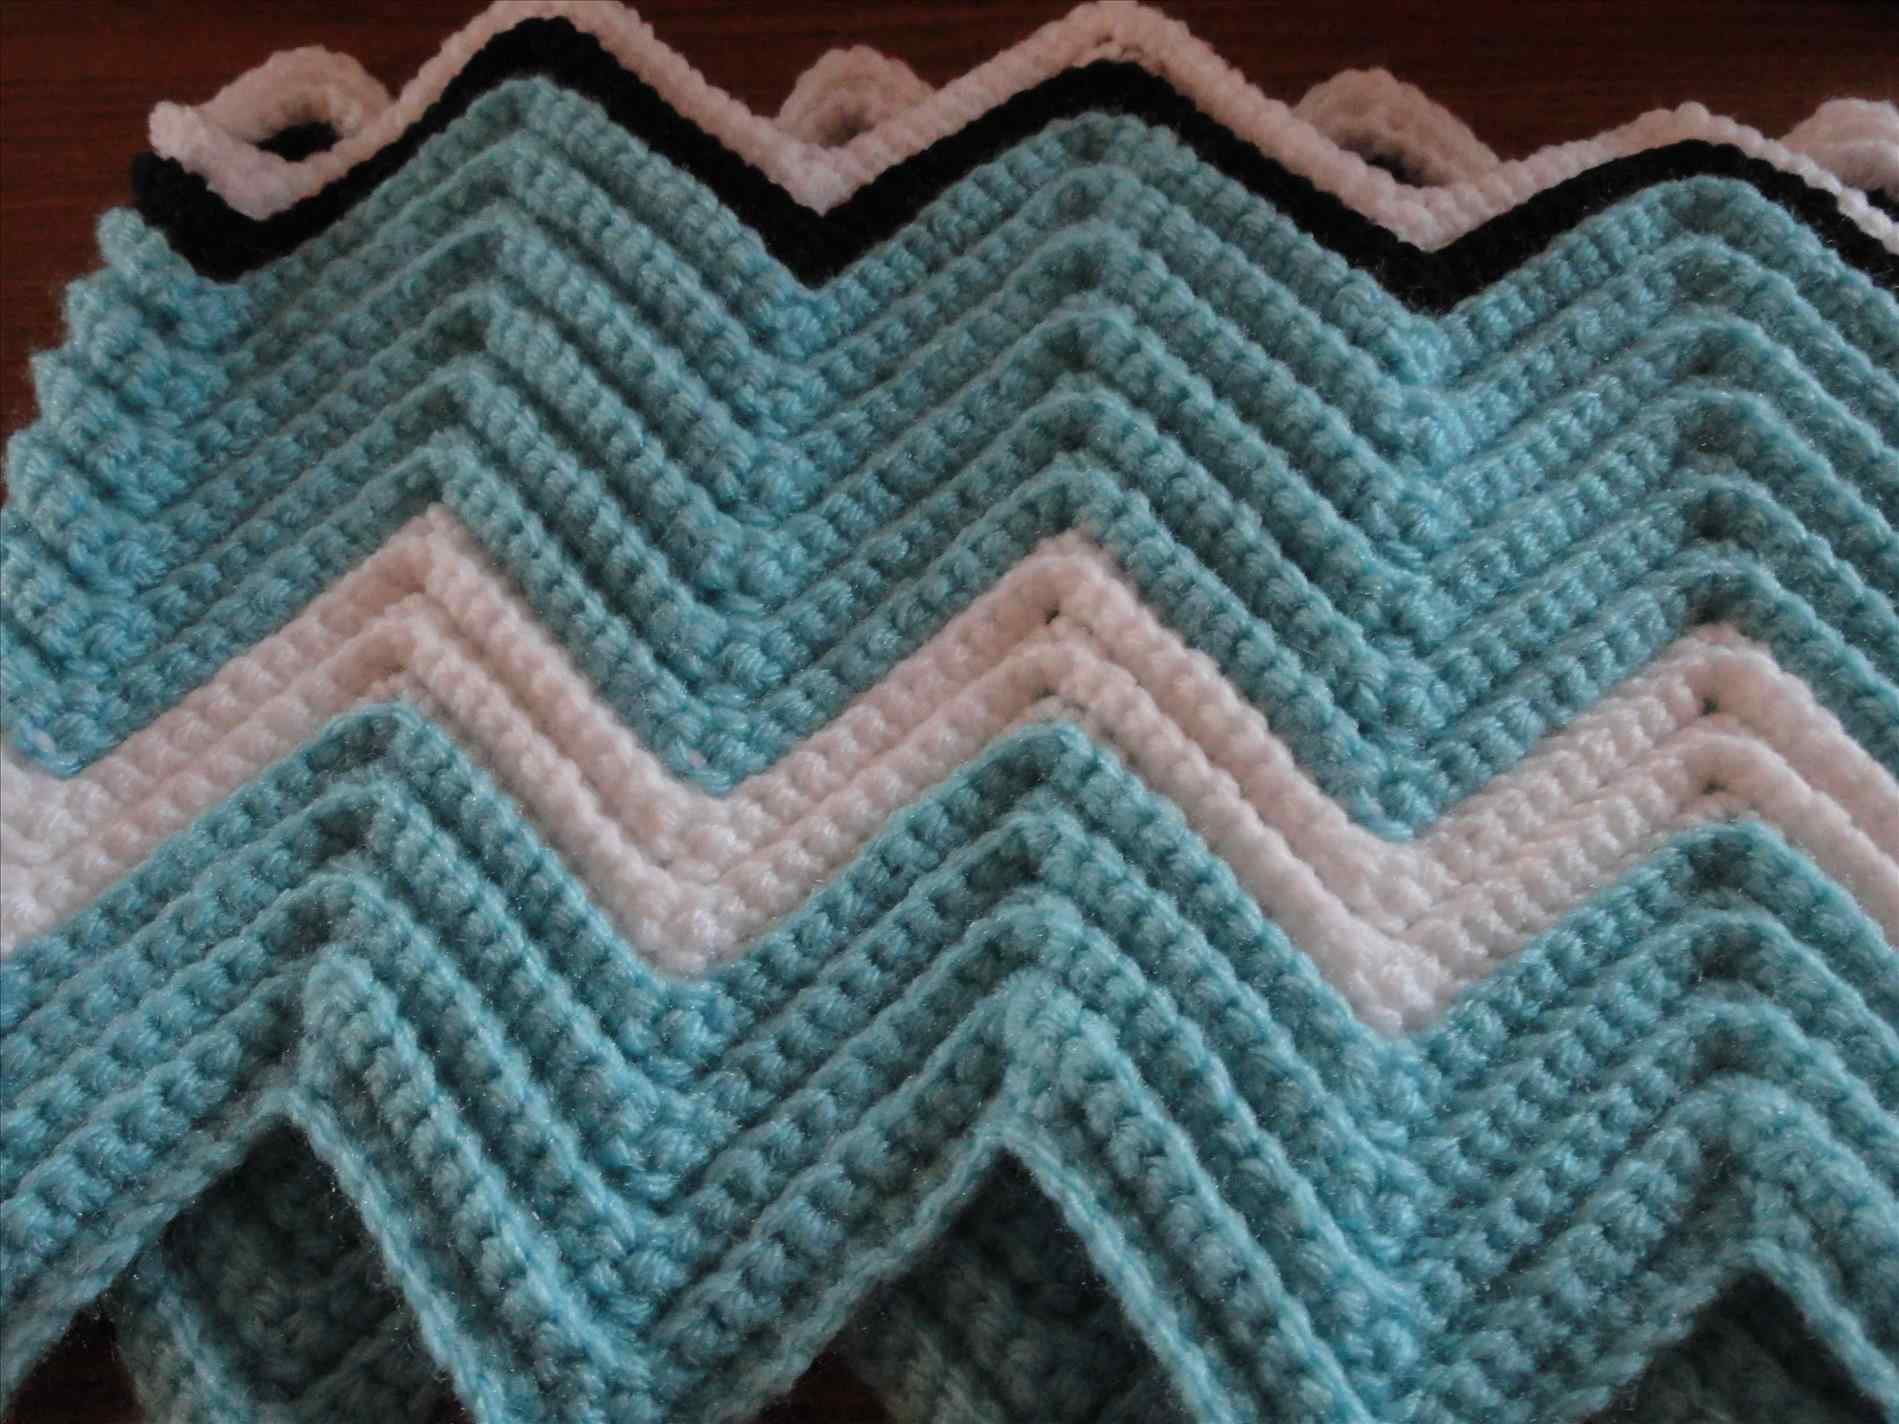 Crochet Ripple Afghan Patterns Crochet Ripple Afghan Patterns Inspb